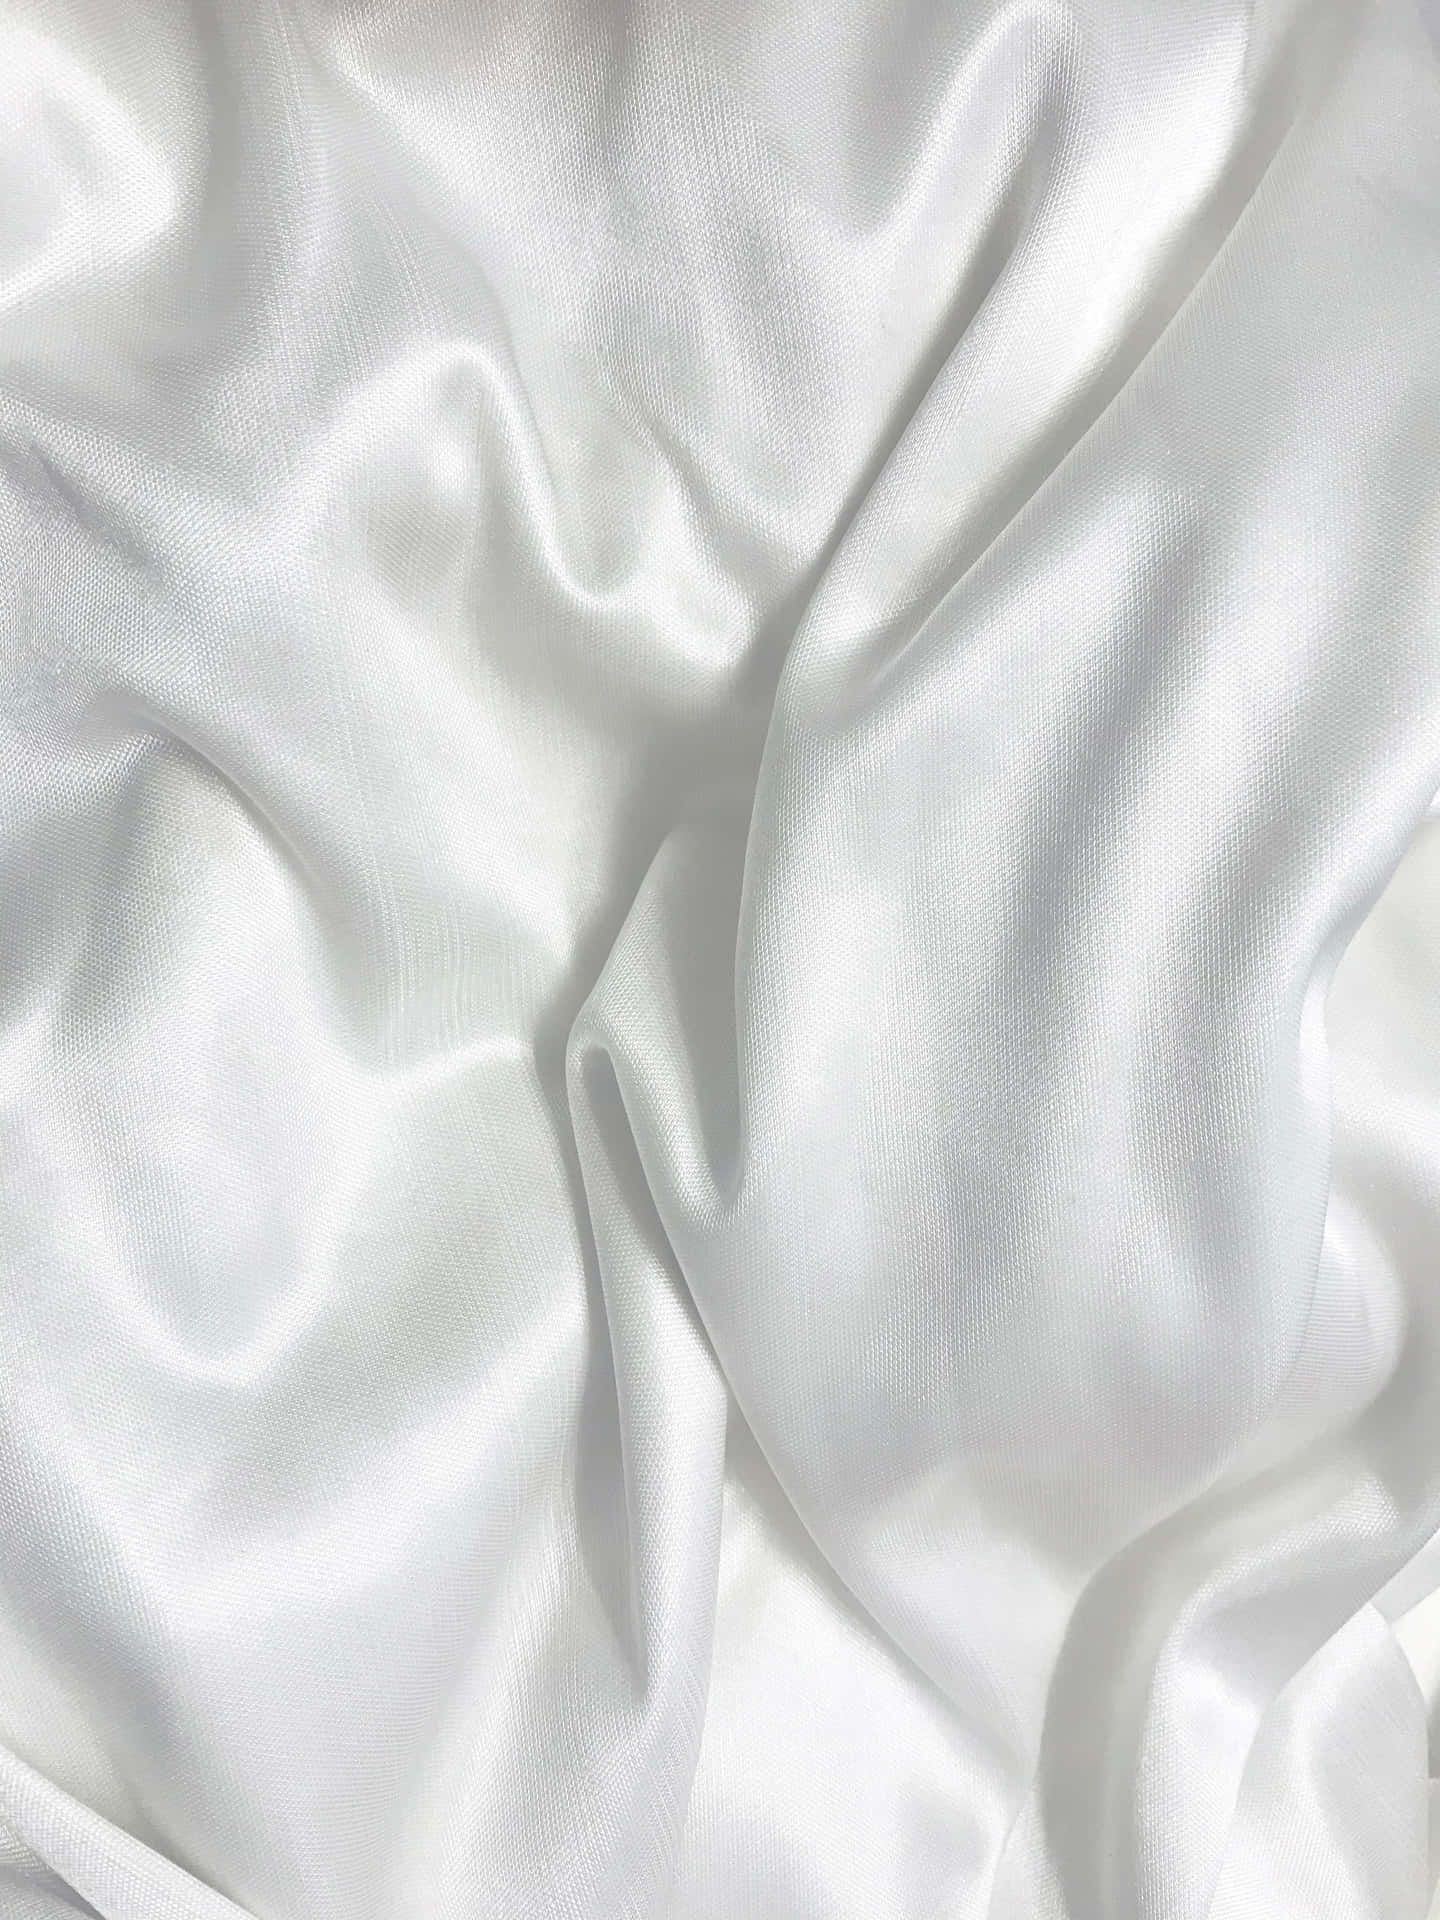 White Fabric Texture Wallpaper